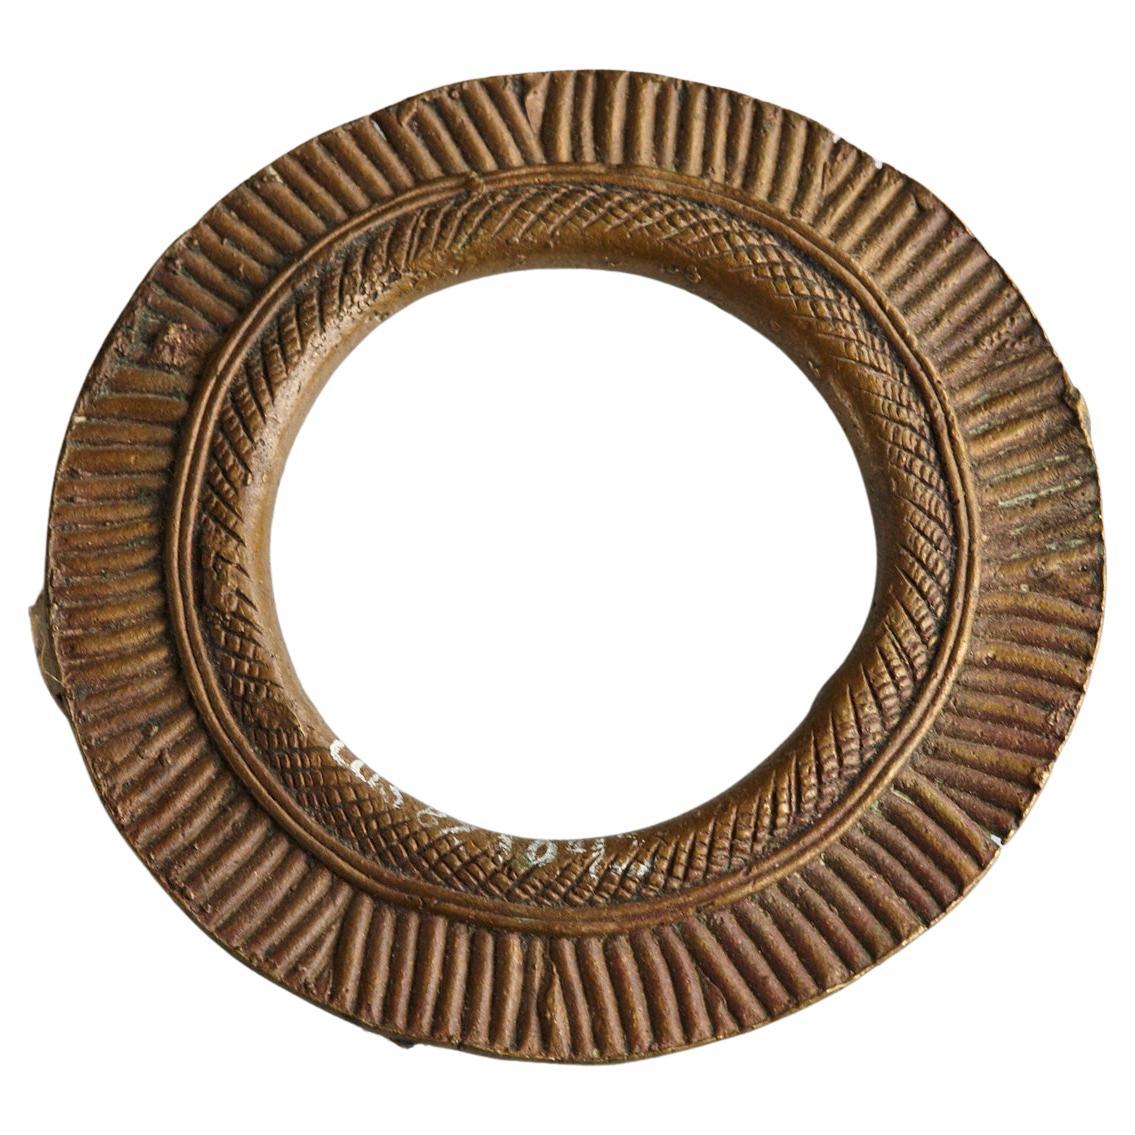 Bronze Currency Bracelet/Manilla, Beri People, Sudan, 19th Century - No 2 For Sale